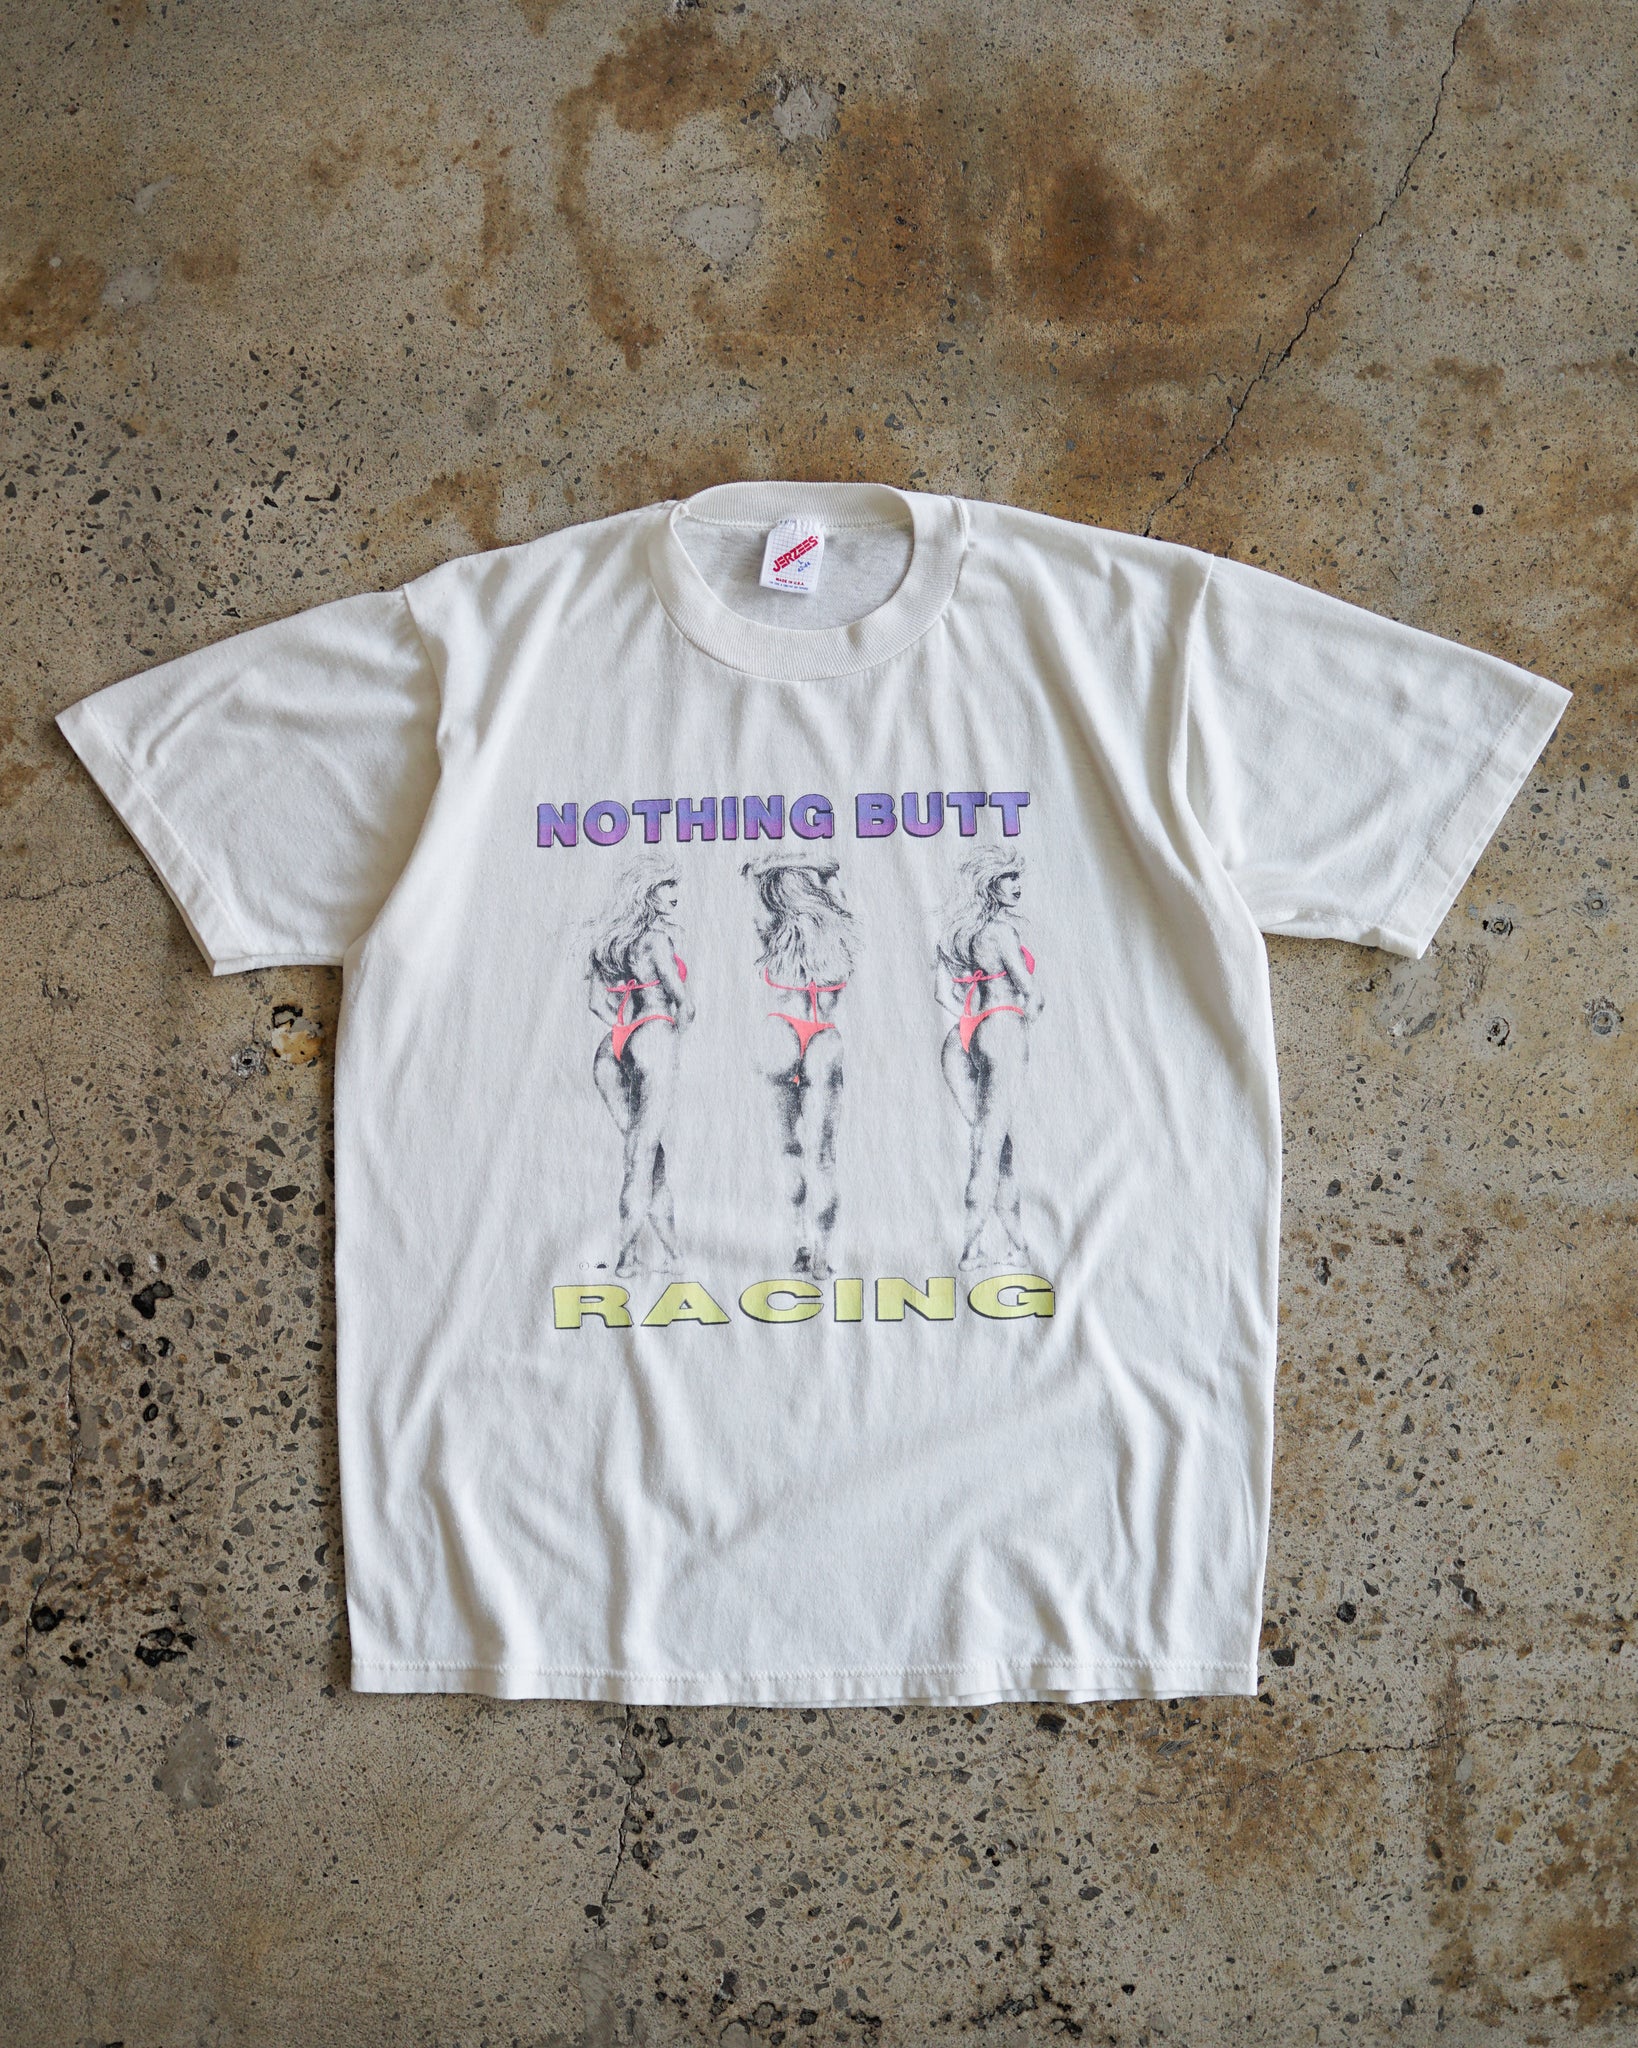 "nothing butt racing" t-shirt